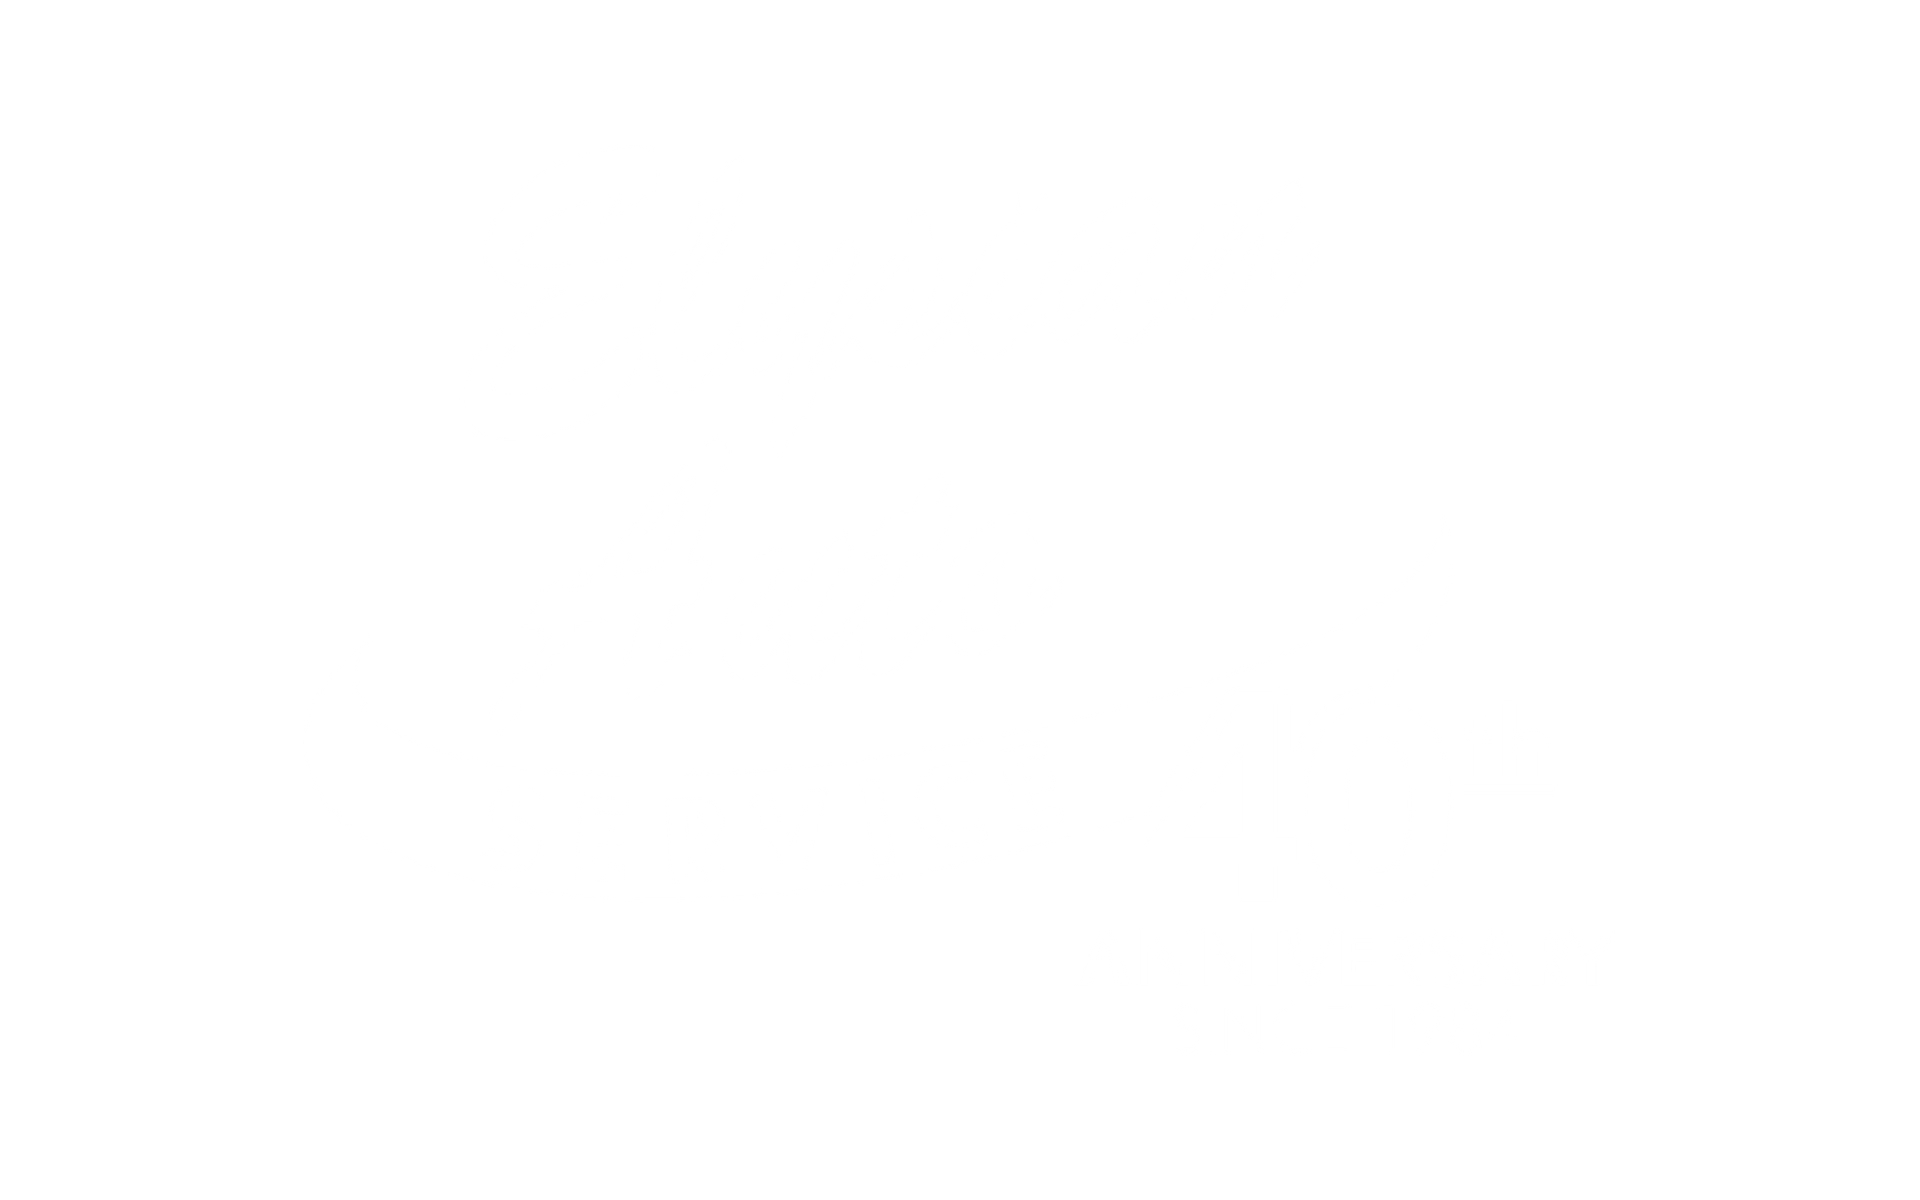 Elysian Auto Service in Elysian, MN